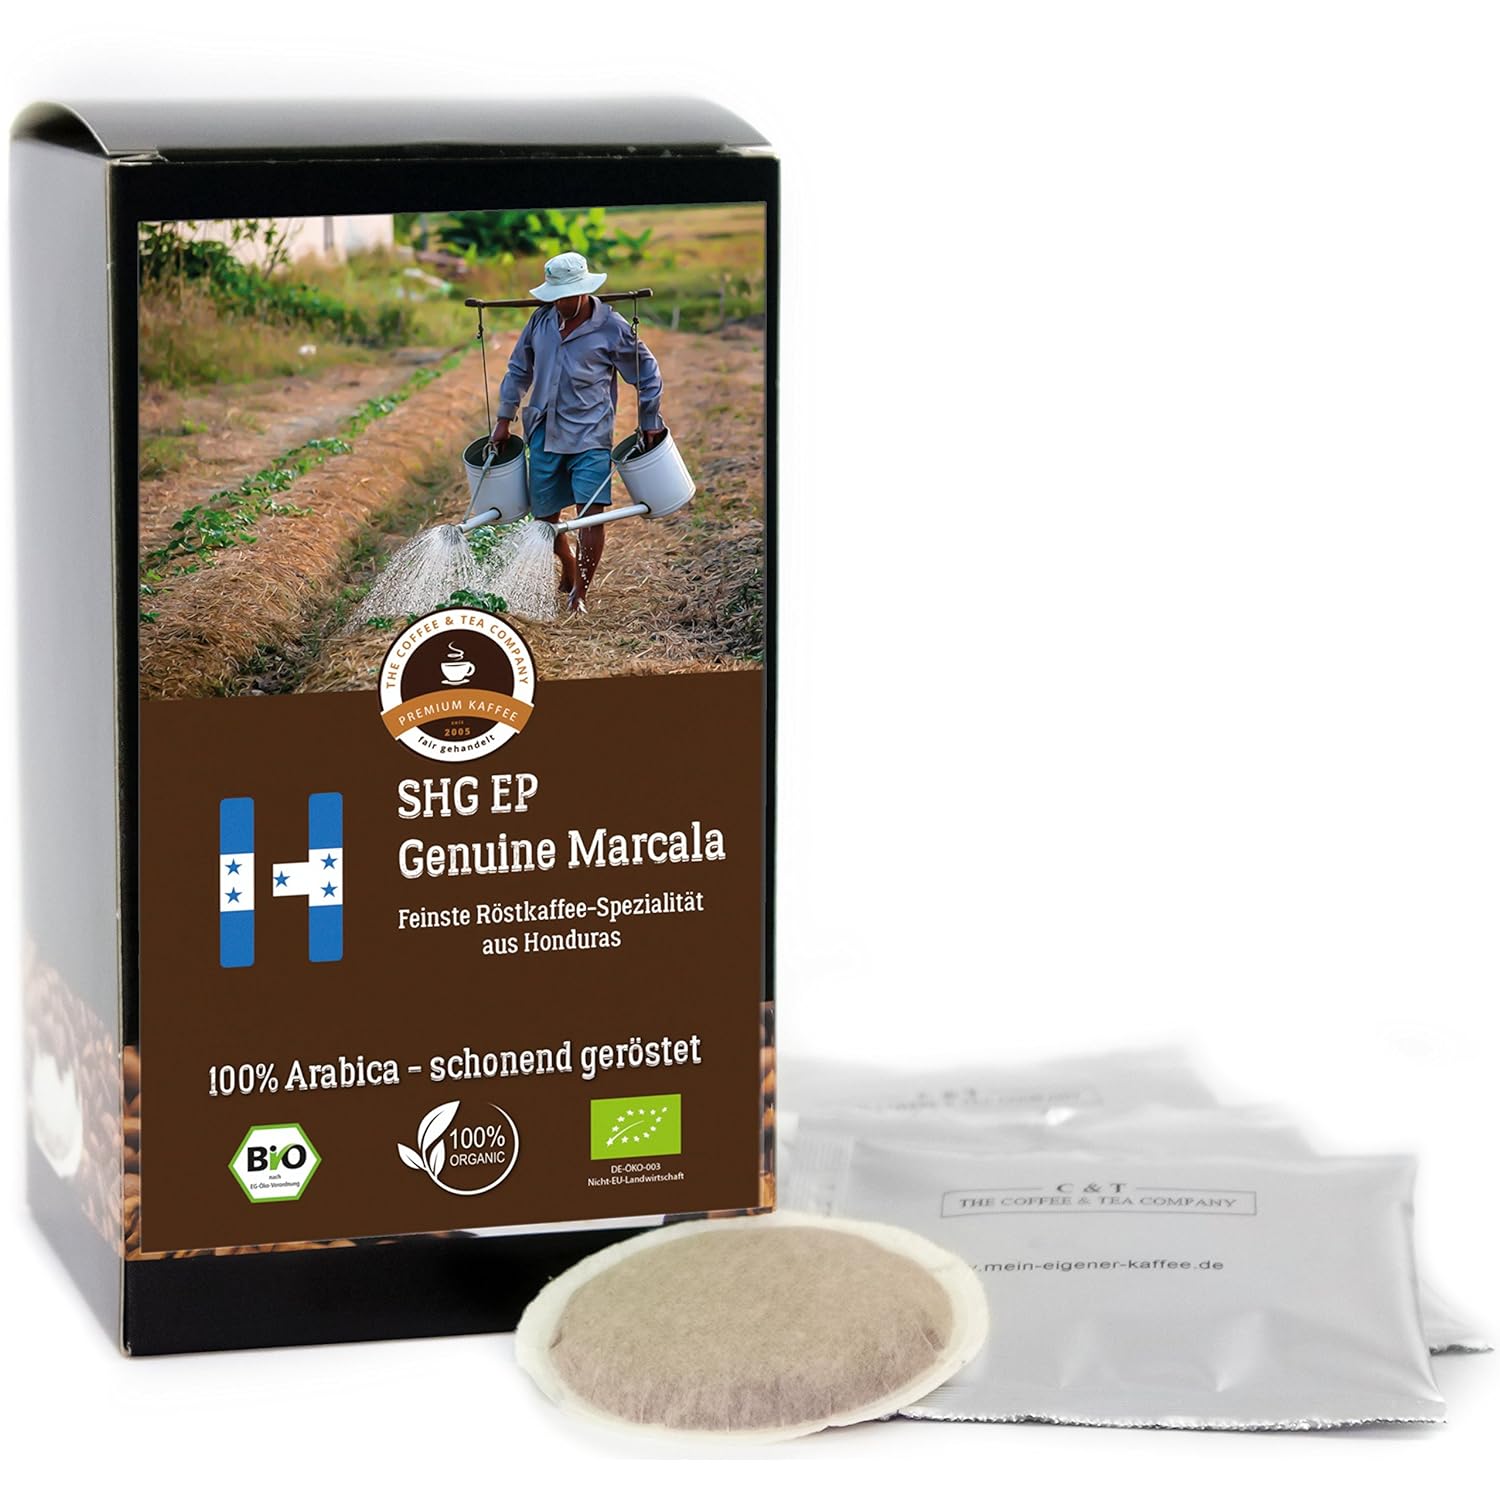 Coffee Globetrotter - Organic Honduras Genuine Marcala - 150 Premium Coffee Pods - for Senseo Coffee Machine - Top Coffee - Roasted Coffee from Organic Cultivation